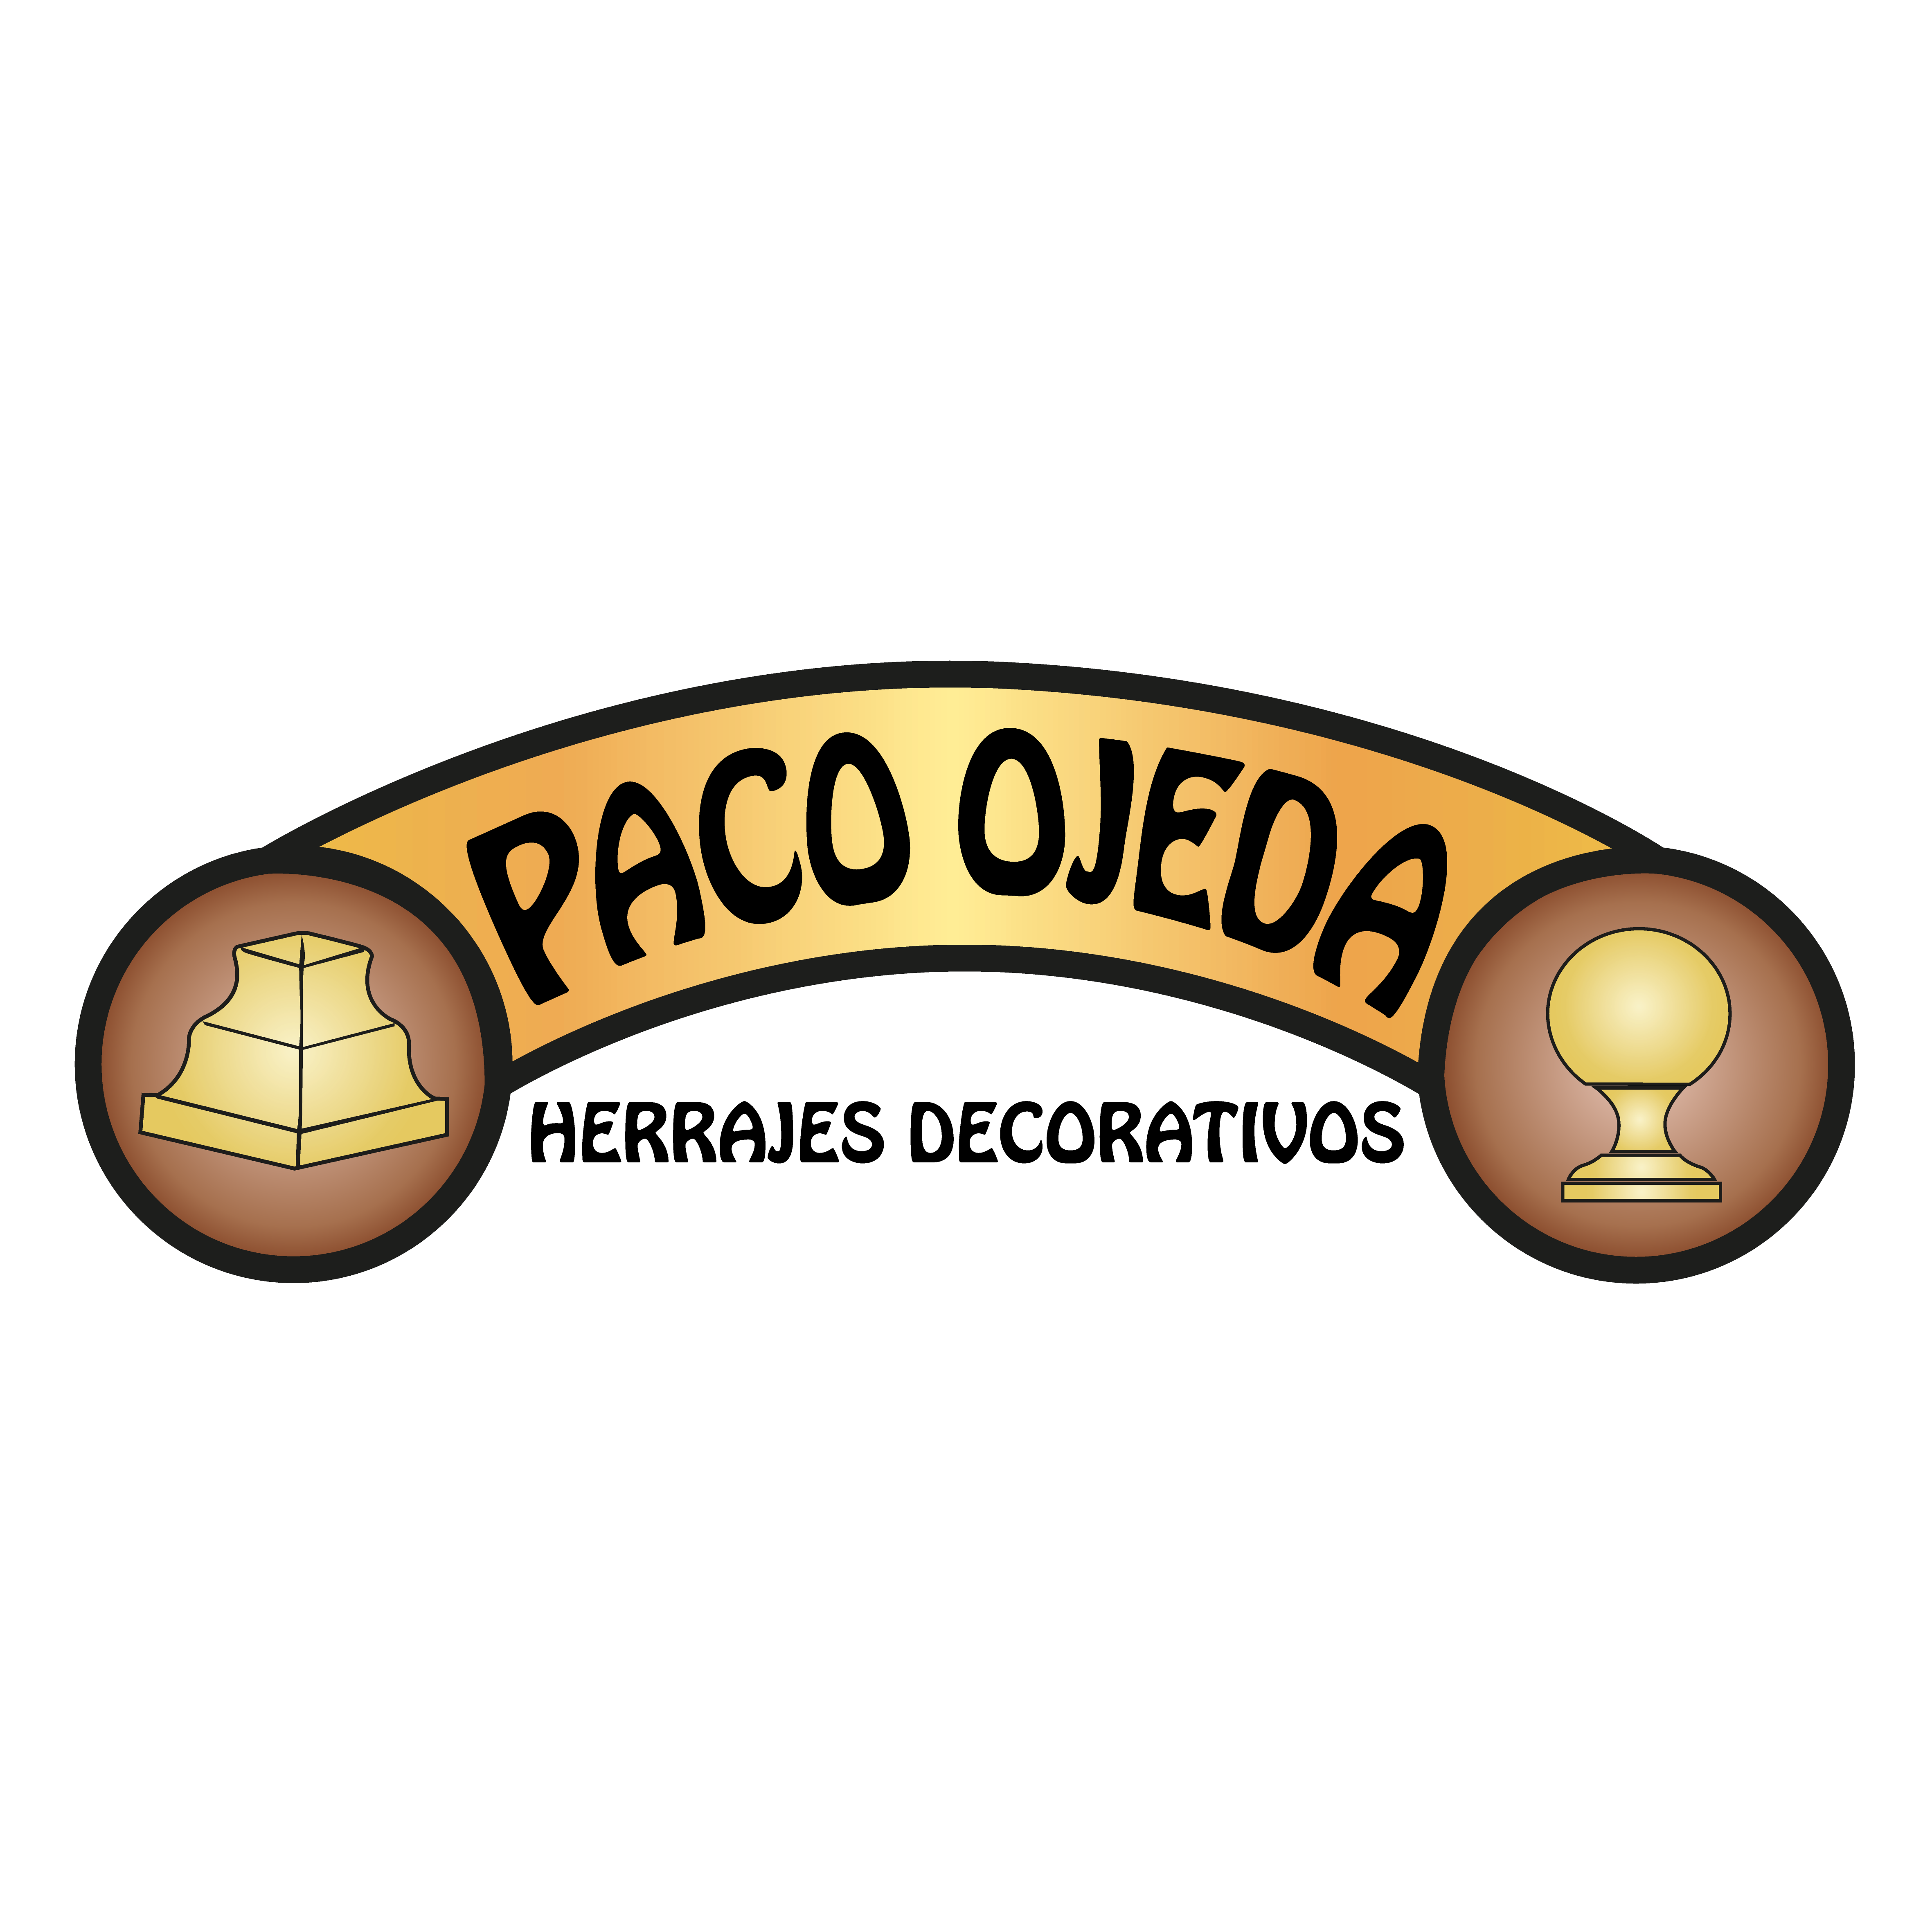 Paco Ojeda Herrajes Decorativos Logo